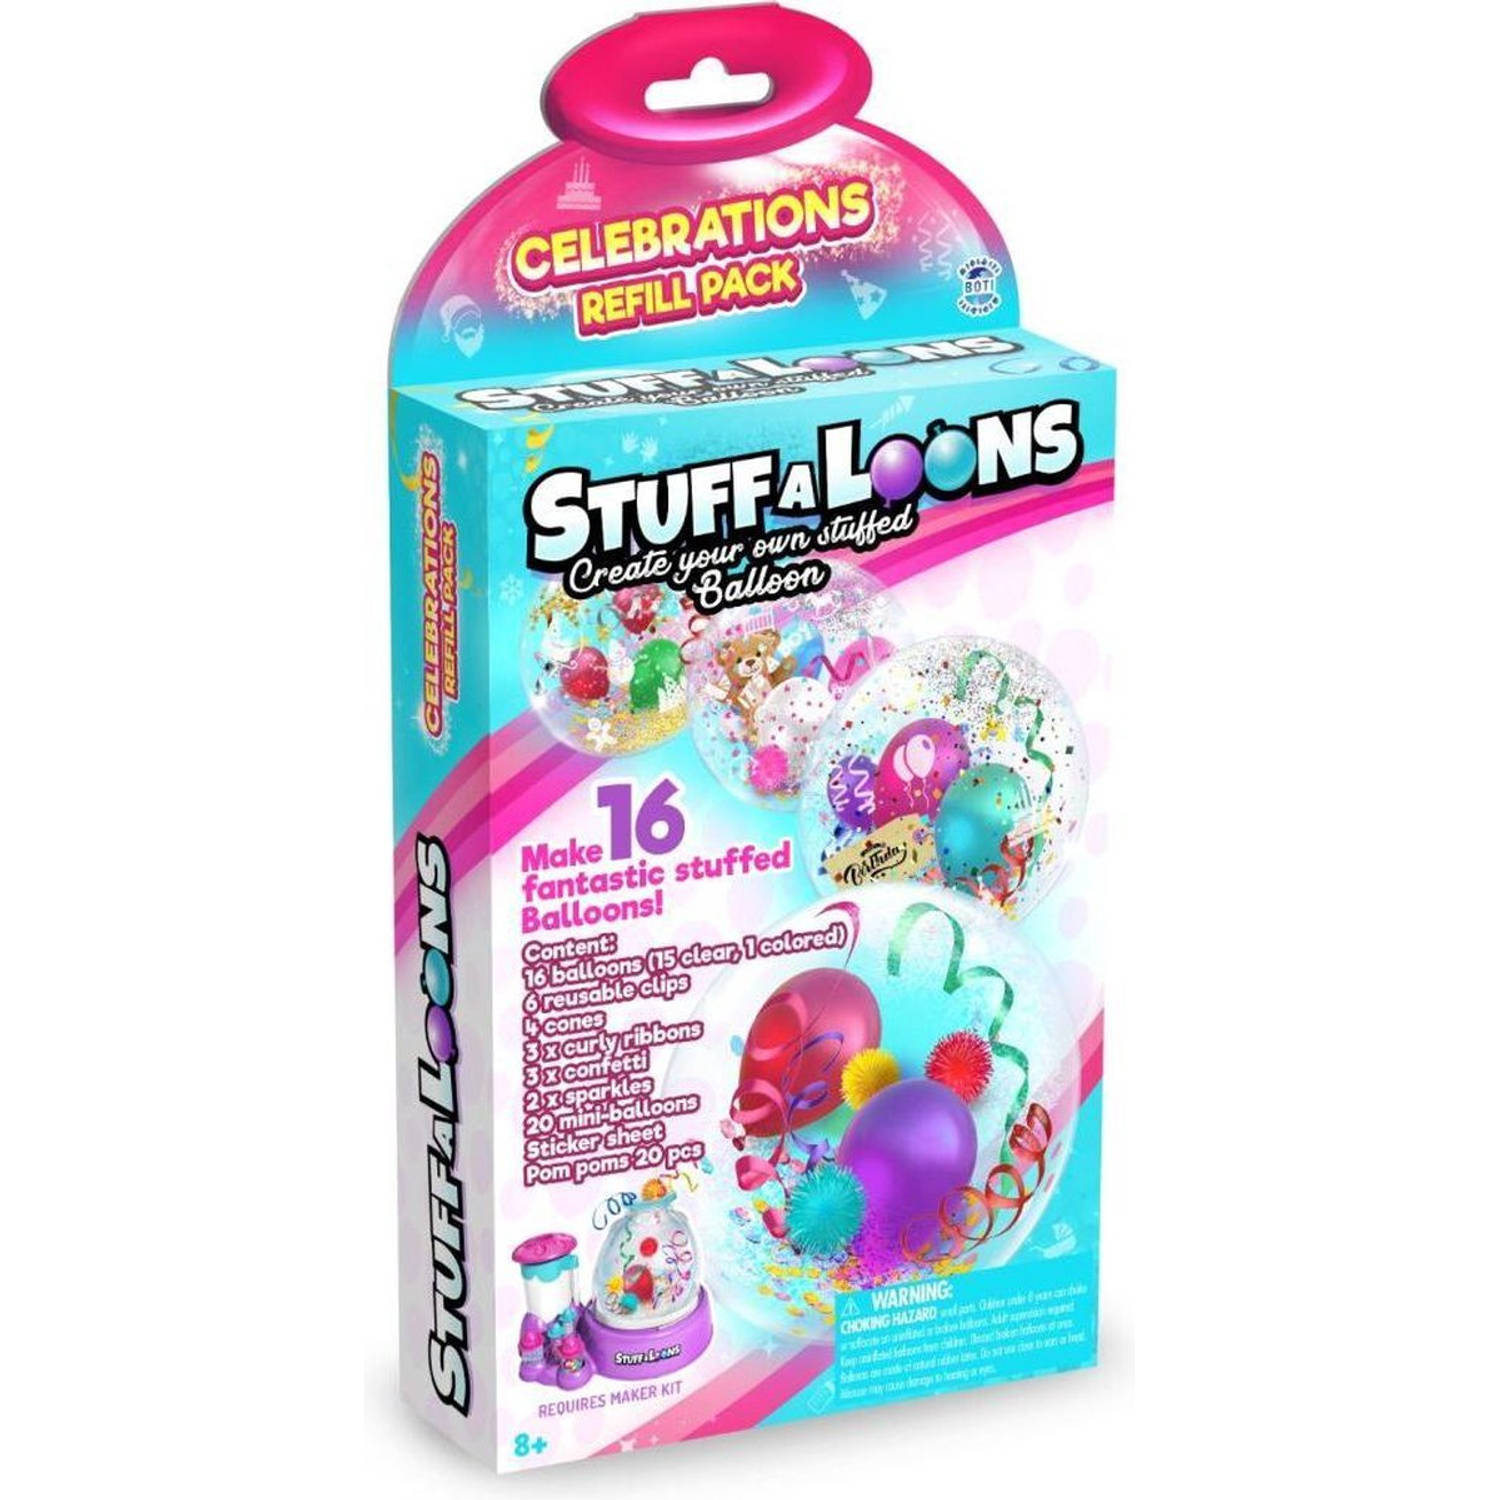 Stuff-a-loons Ballonnenpakket Celebrations 30 Cm Latex 75-delig